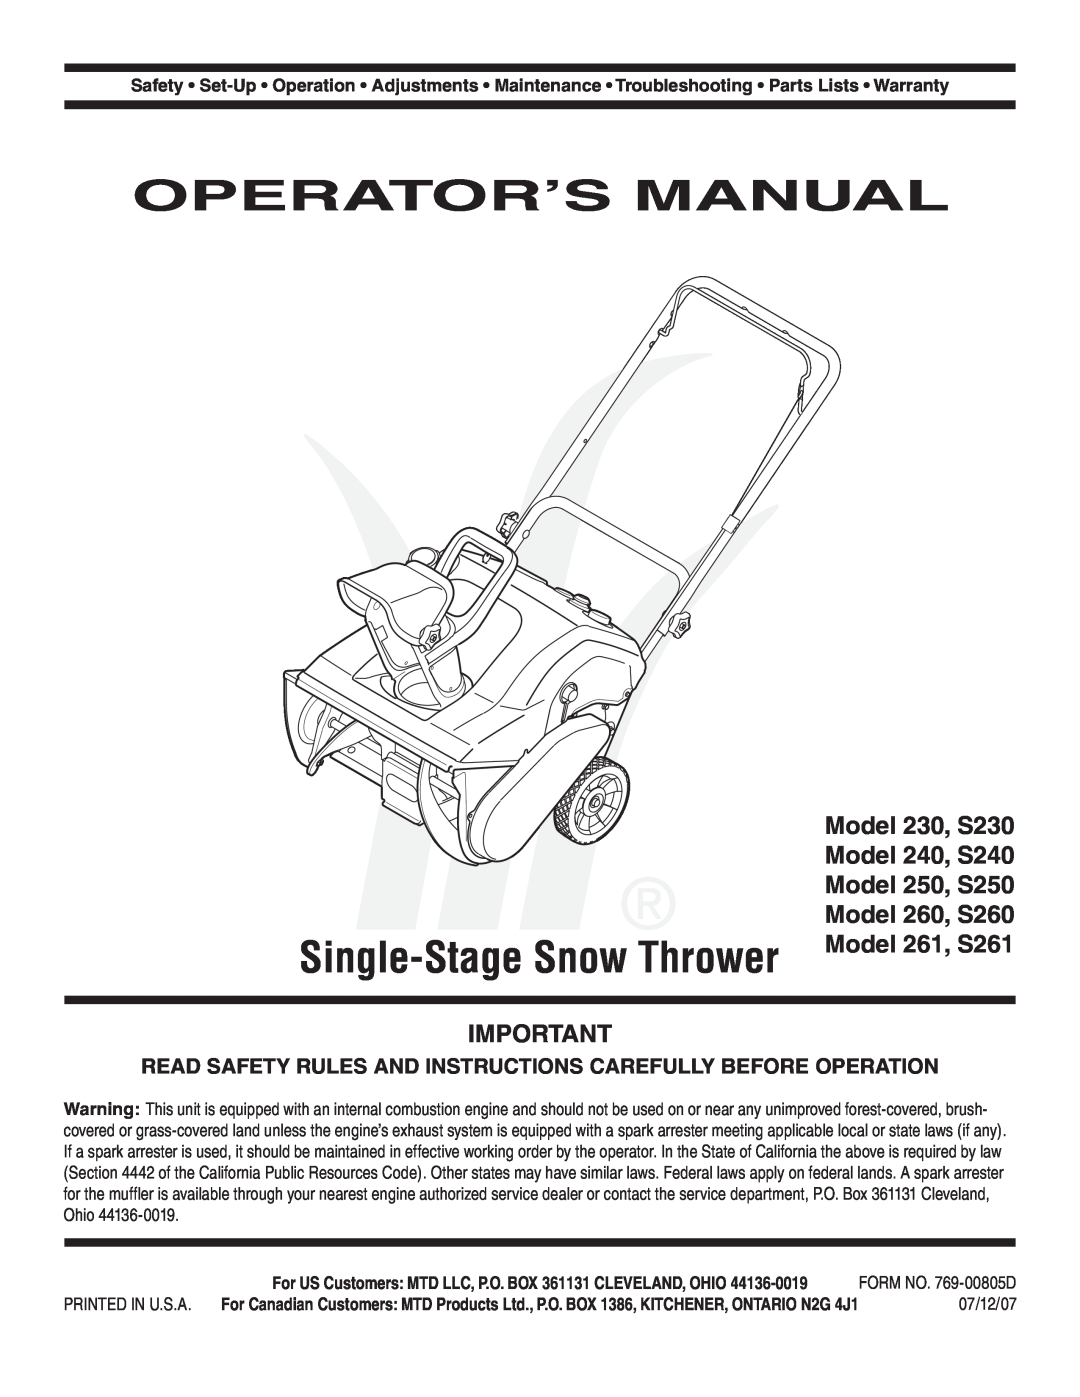 MTD warranty Operator’S Manual, Single-Stage Snow Thrower, Model 230, S230, Model 240, S240, Model 250, S250, 07/12/07 